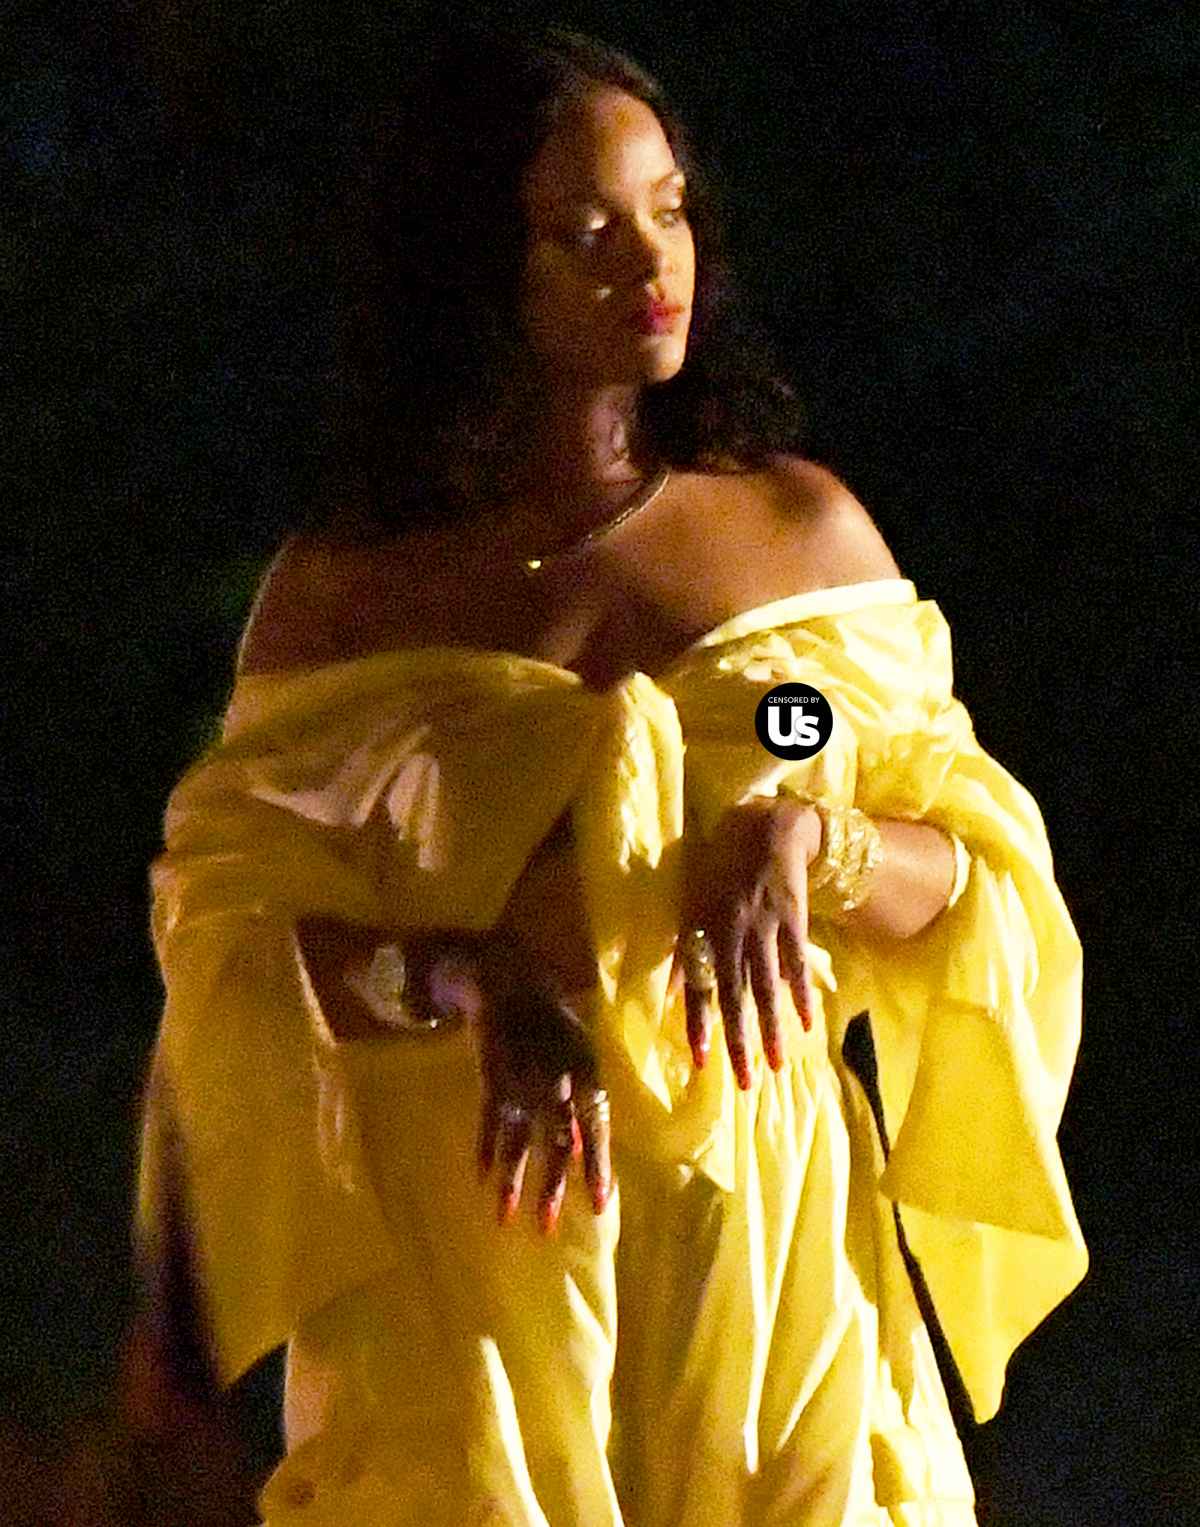 Rihanna Wears Giant Cardigan, Shows Nipple Piercing at Chanel